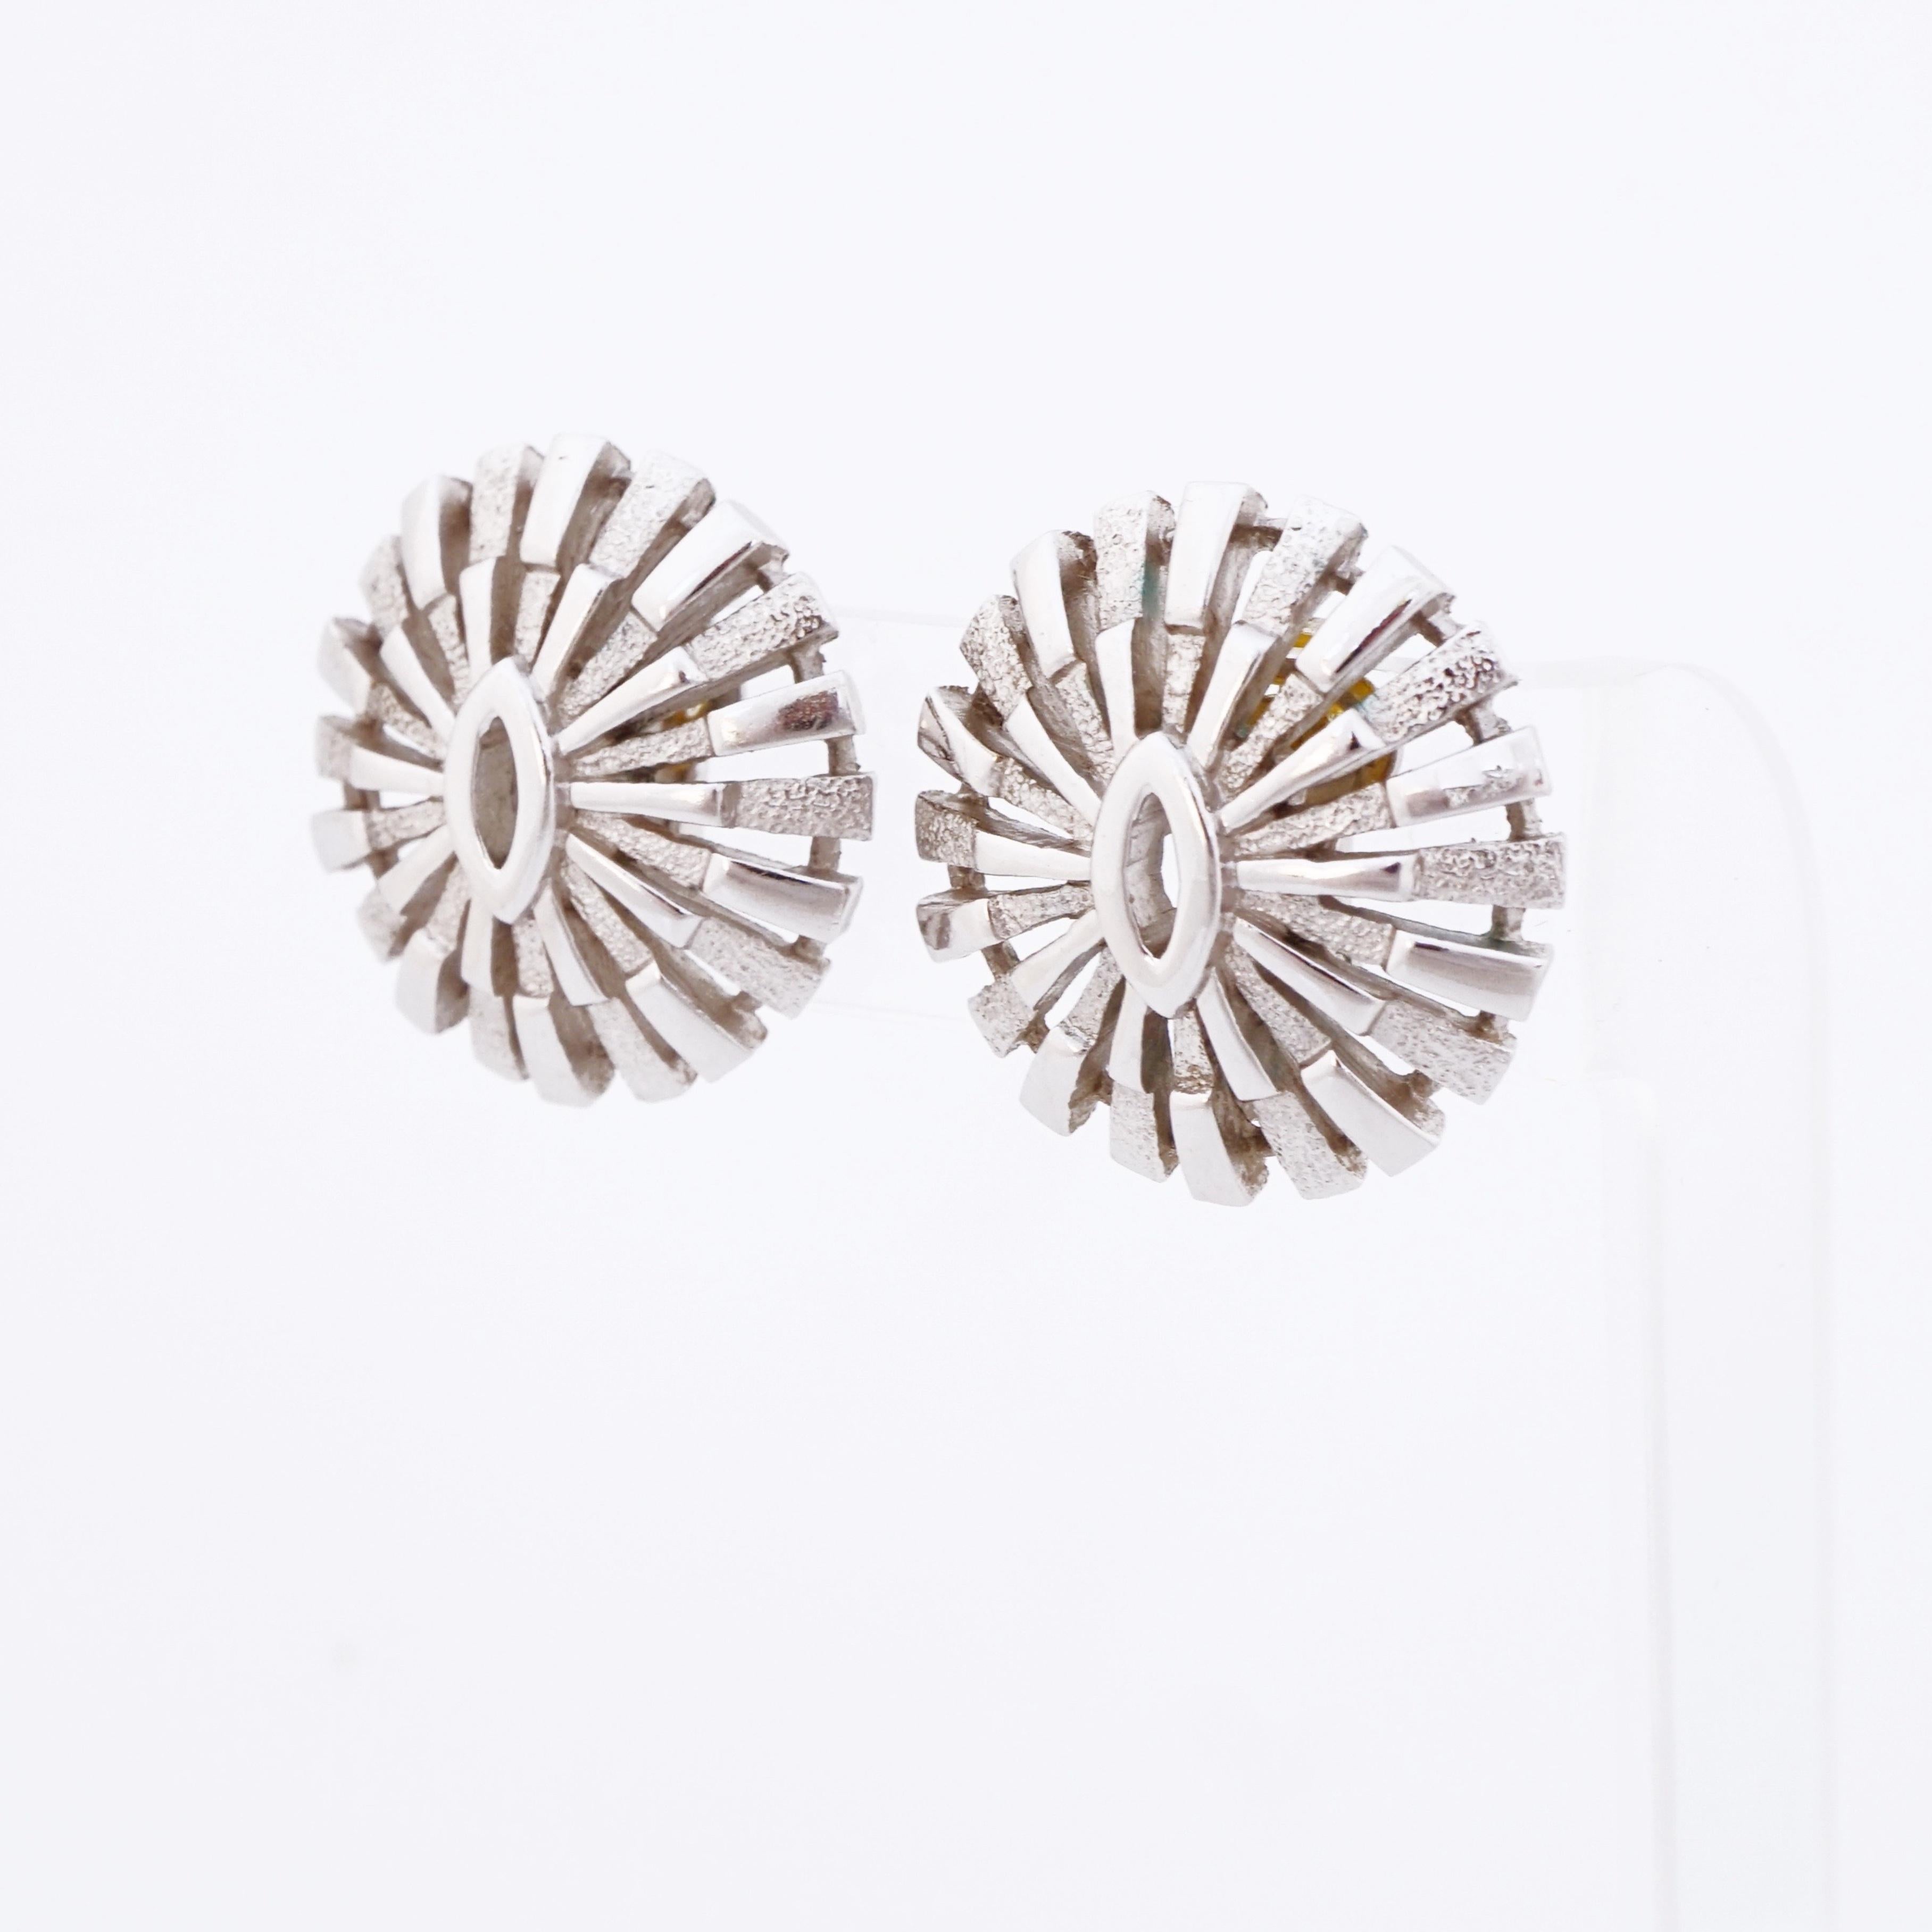 Modern Silver Brutalist Sunburst Earrings By Crown Trifari, 1960s For Sale